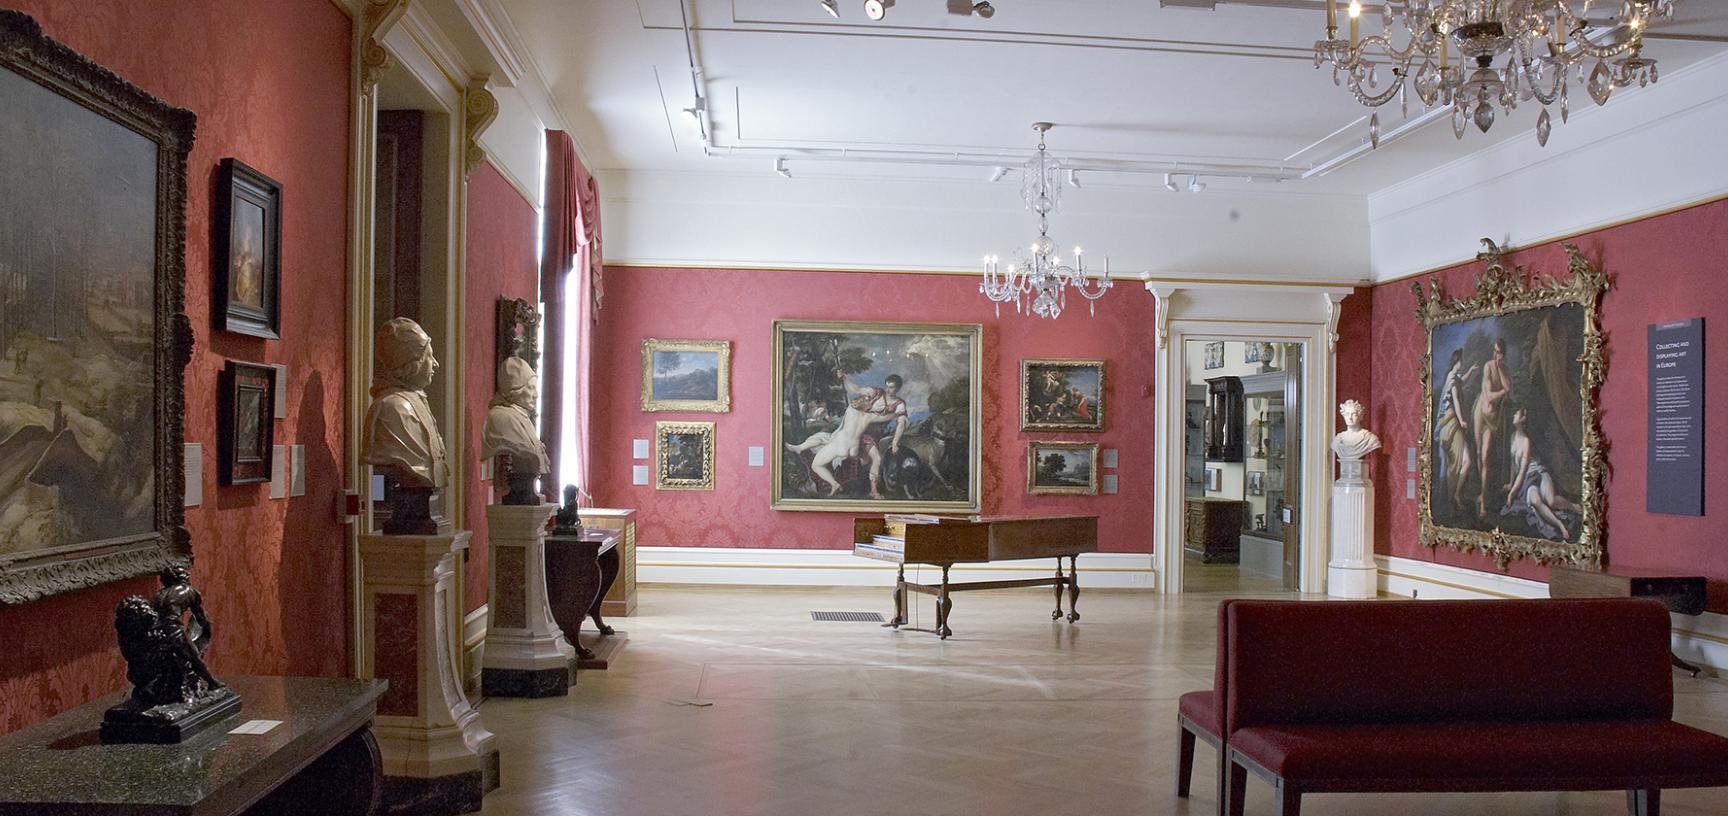 Mallett Gallery at the Ashmolean Museum